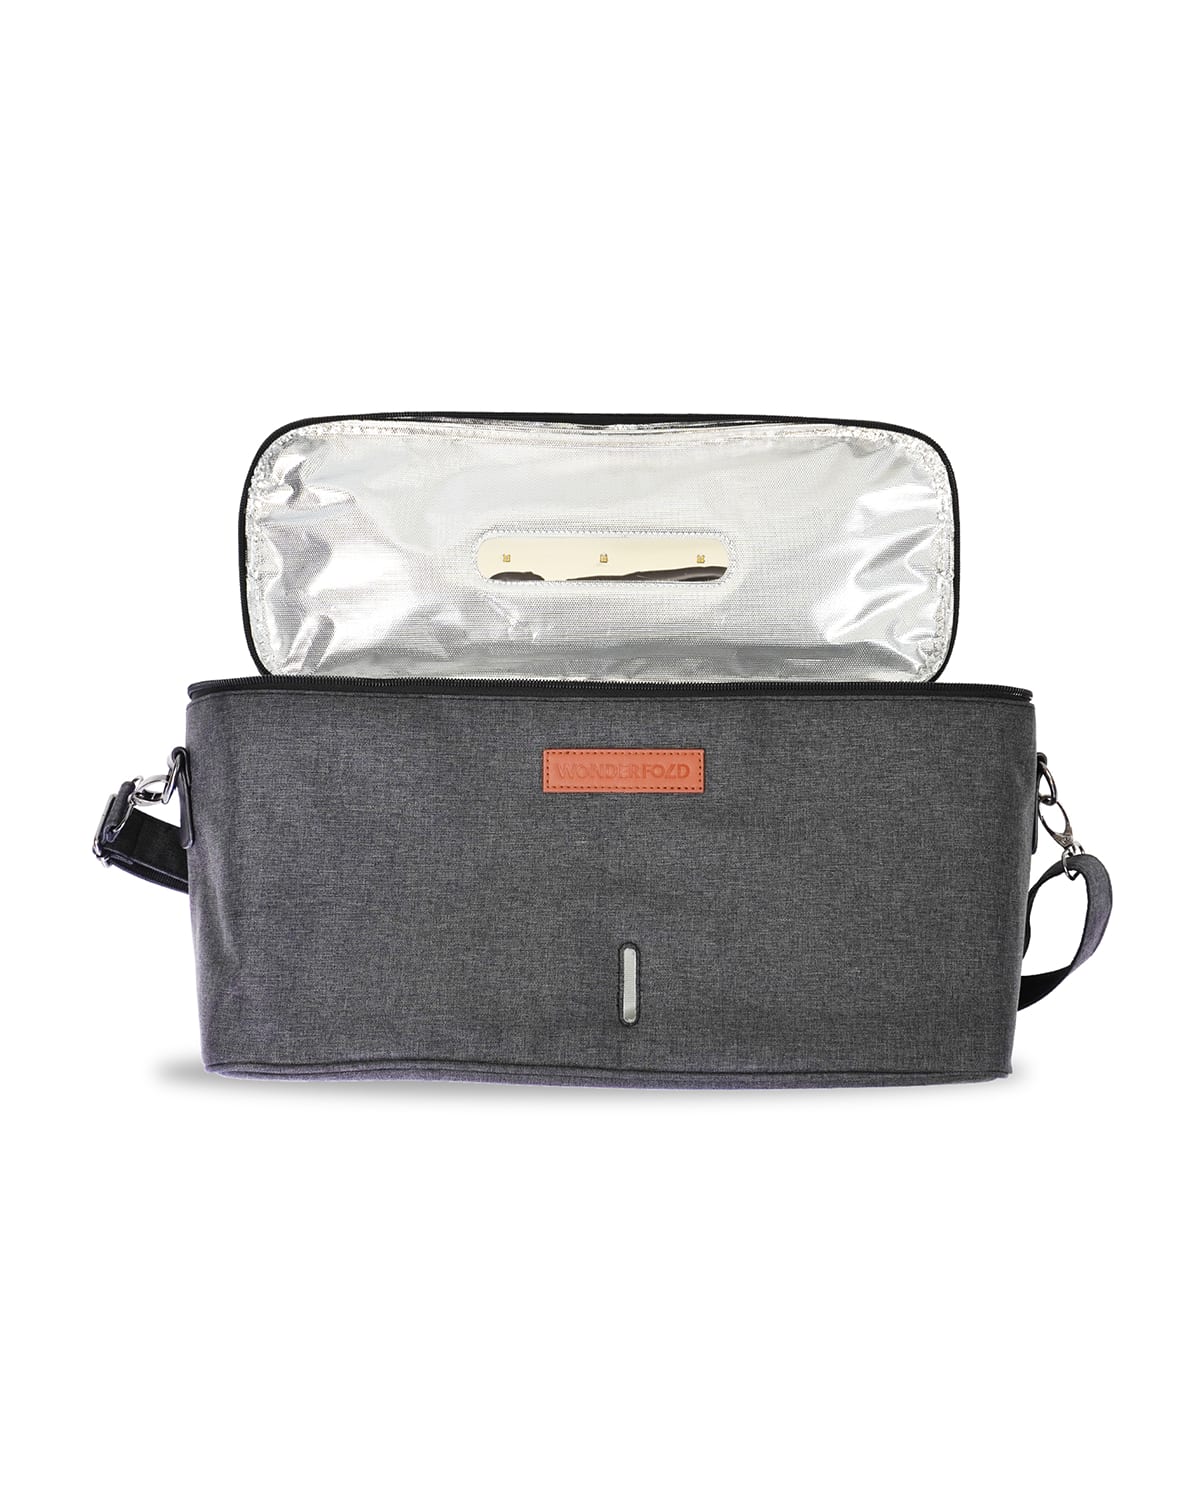 Shop Wonderfold Wagon 2-in-1 Cooler Bag With Uv Sterilizing Light